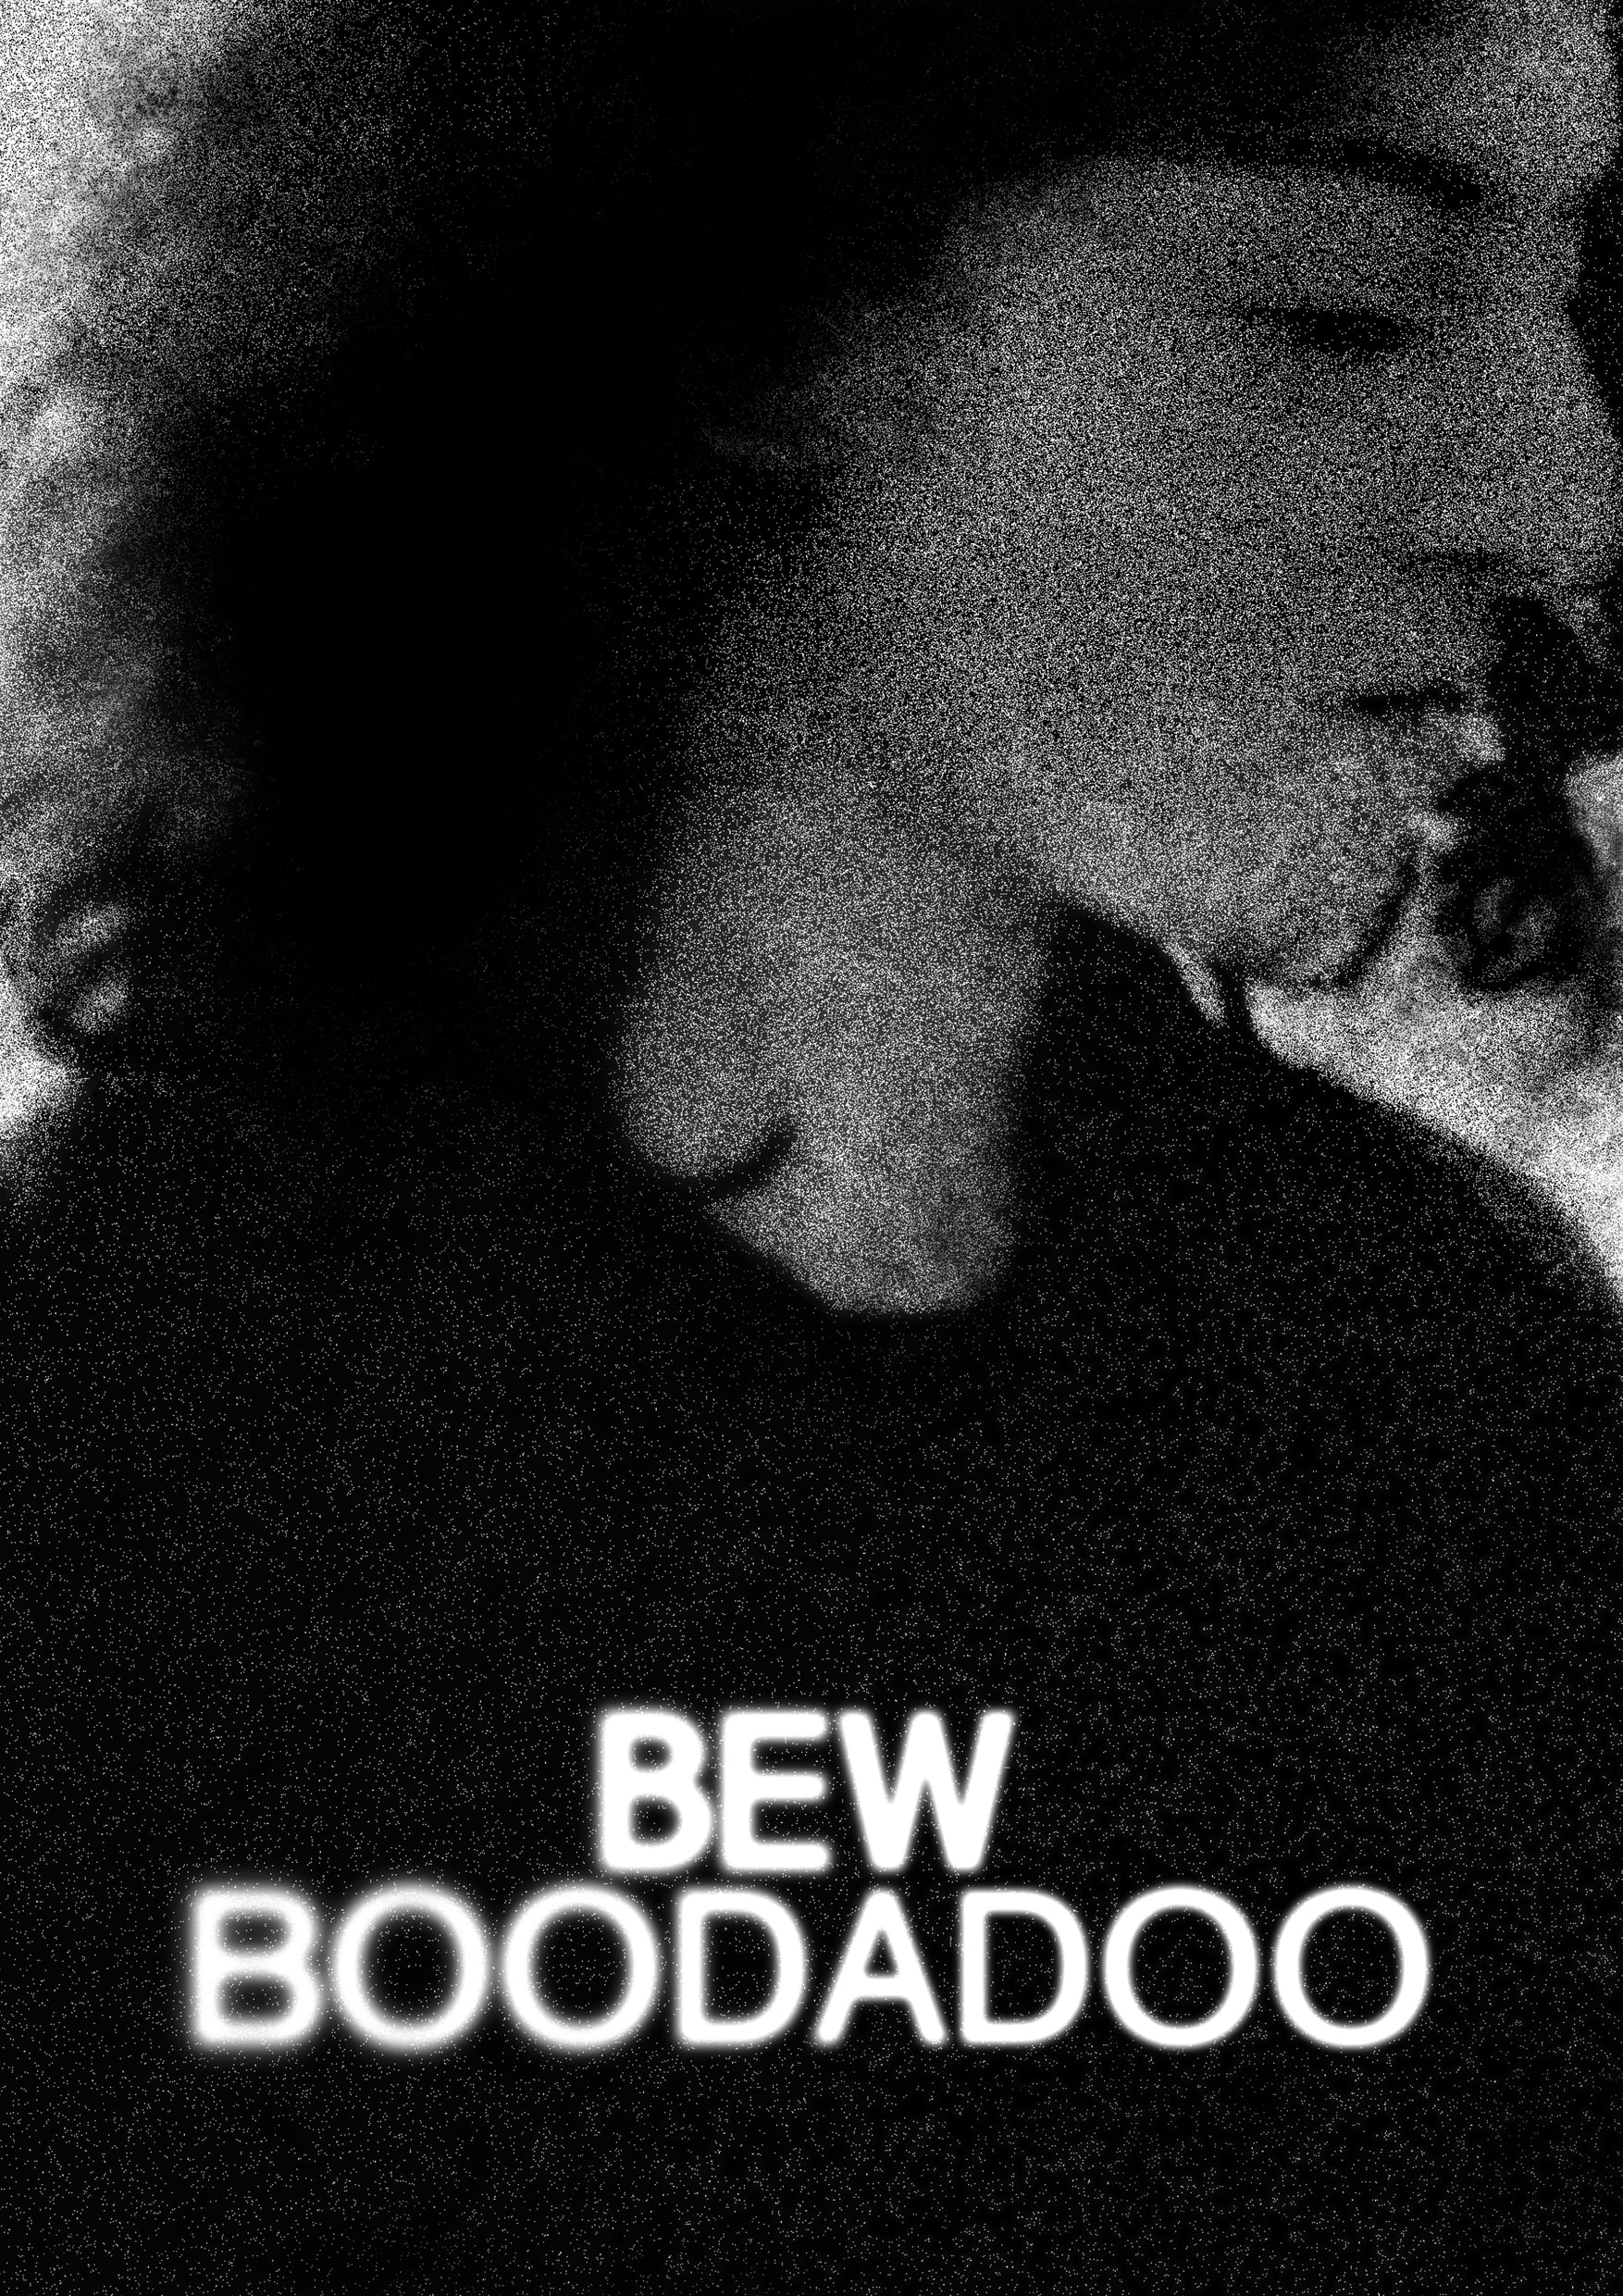 Bew Boodadoo